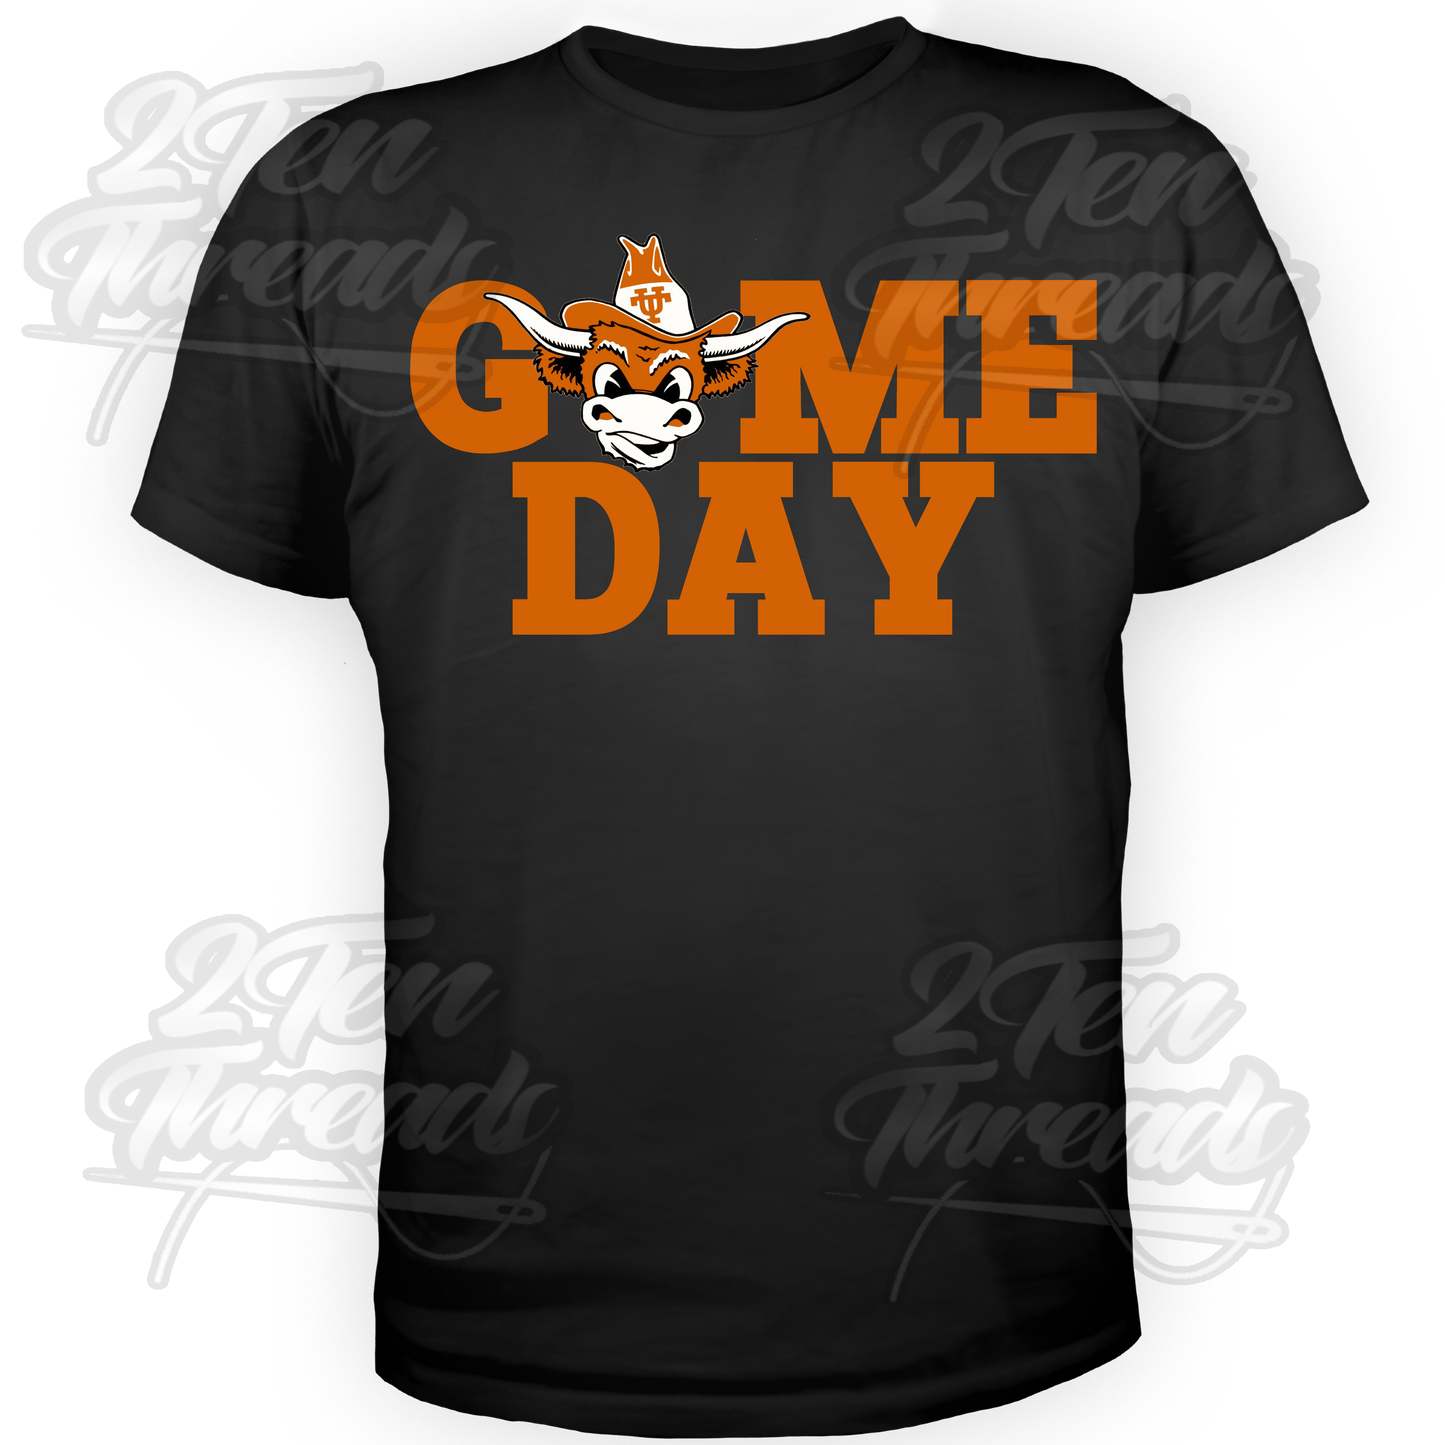 Bevo Game Day shirt